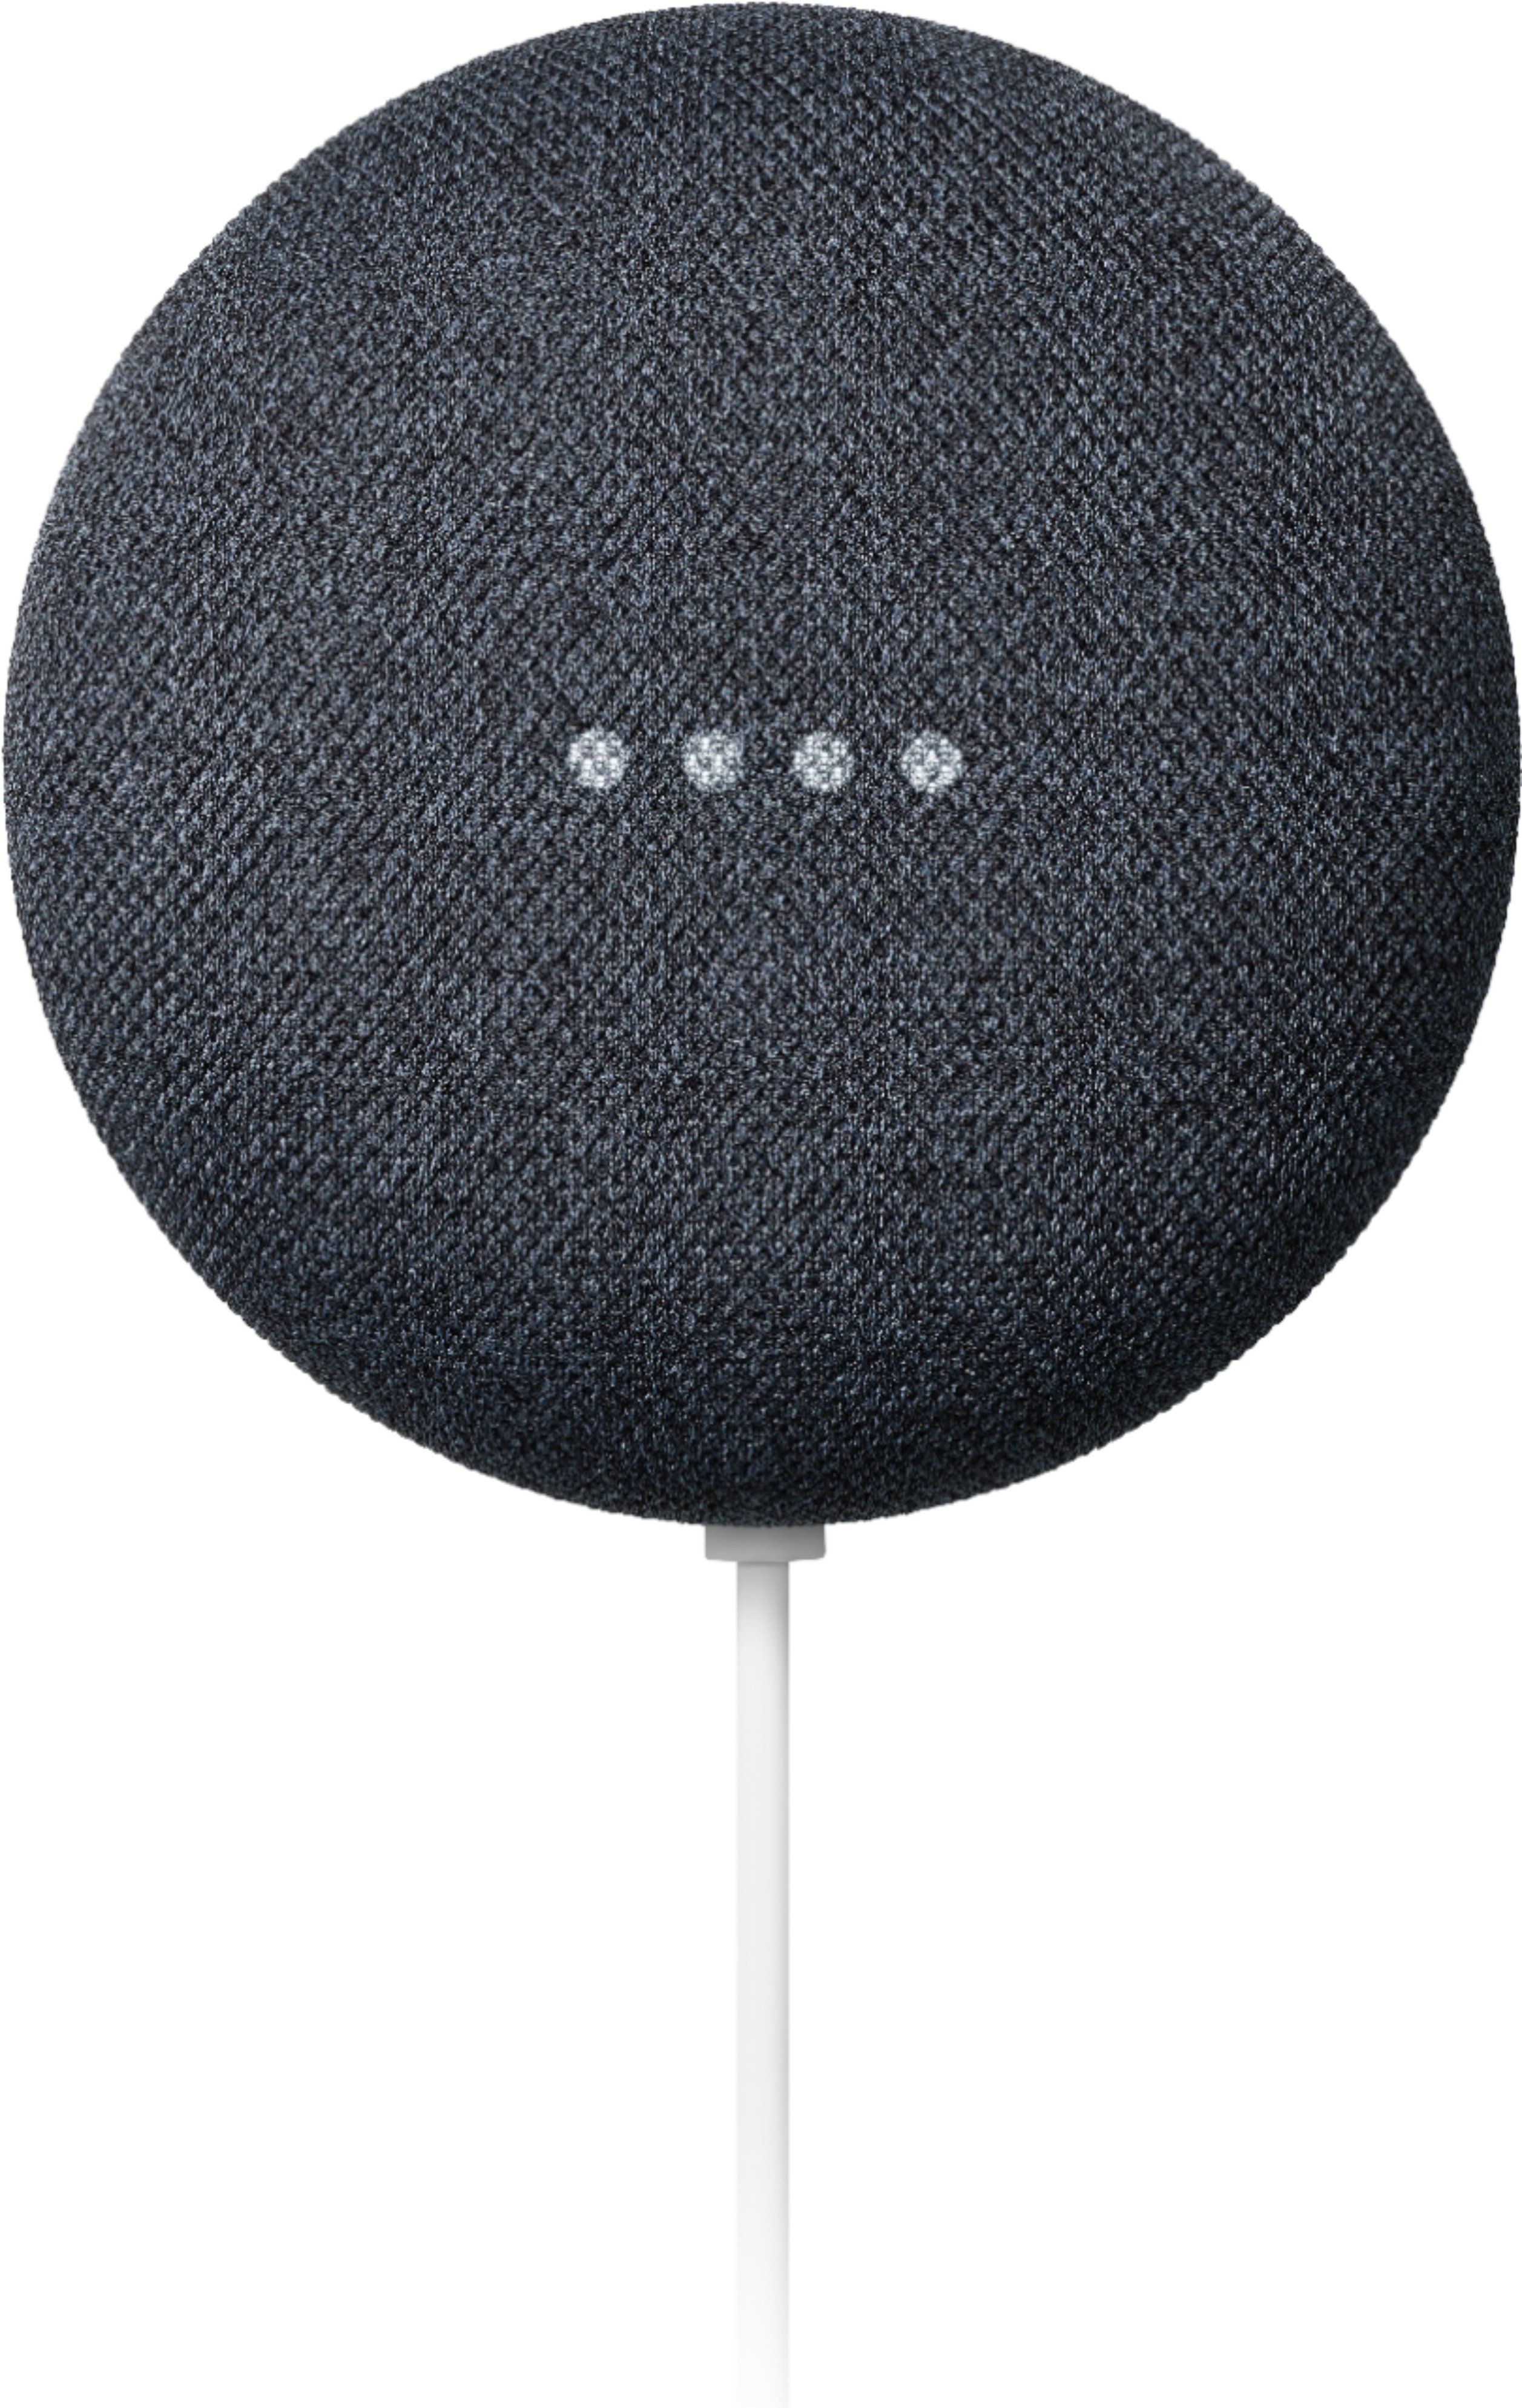 Nest Mini (2nd Generation) Smart Speaker with Google Assistant Charcoal GA00781-US - Best Buy | Best Buy U.S.